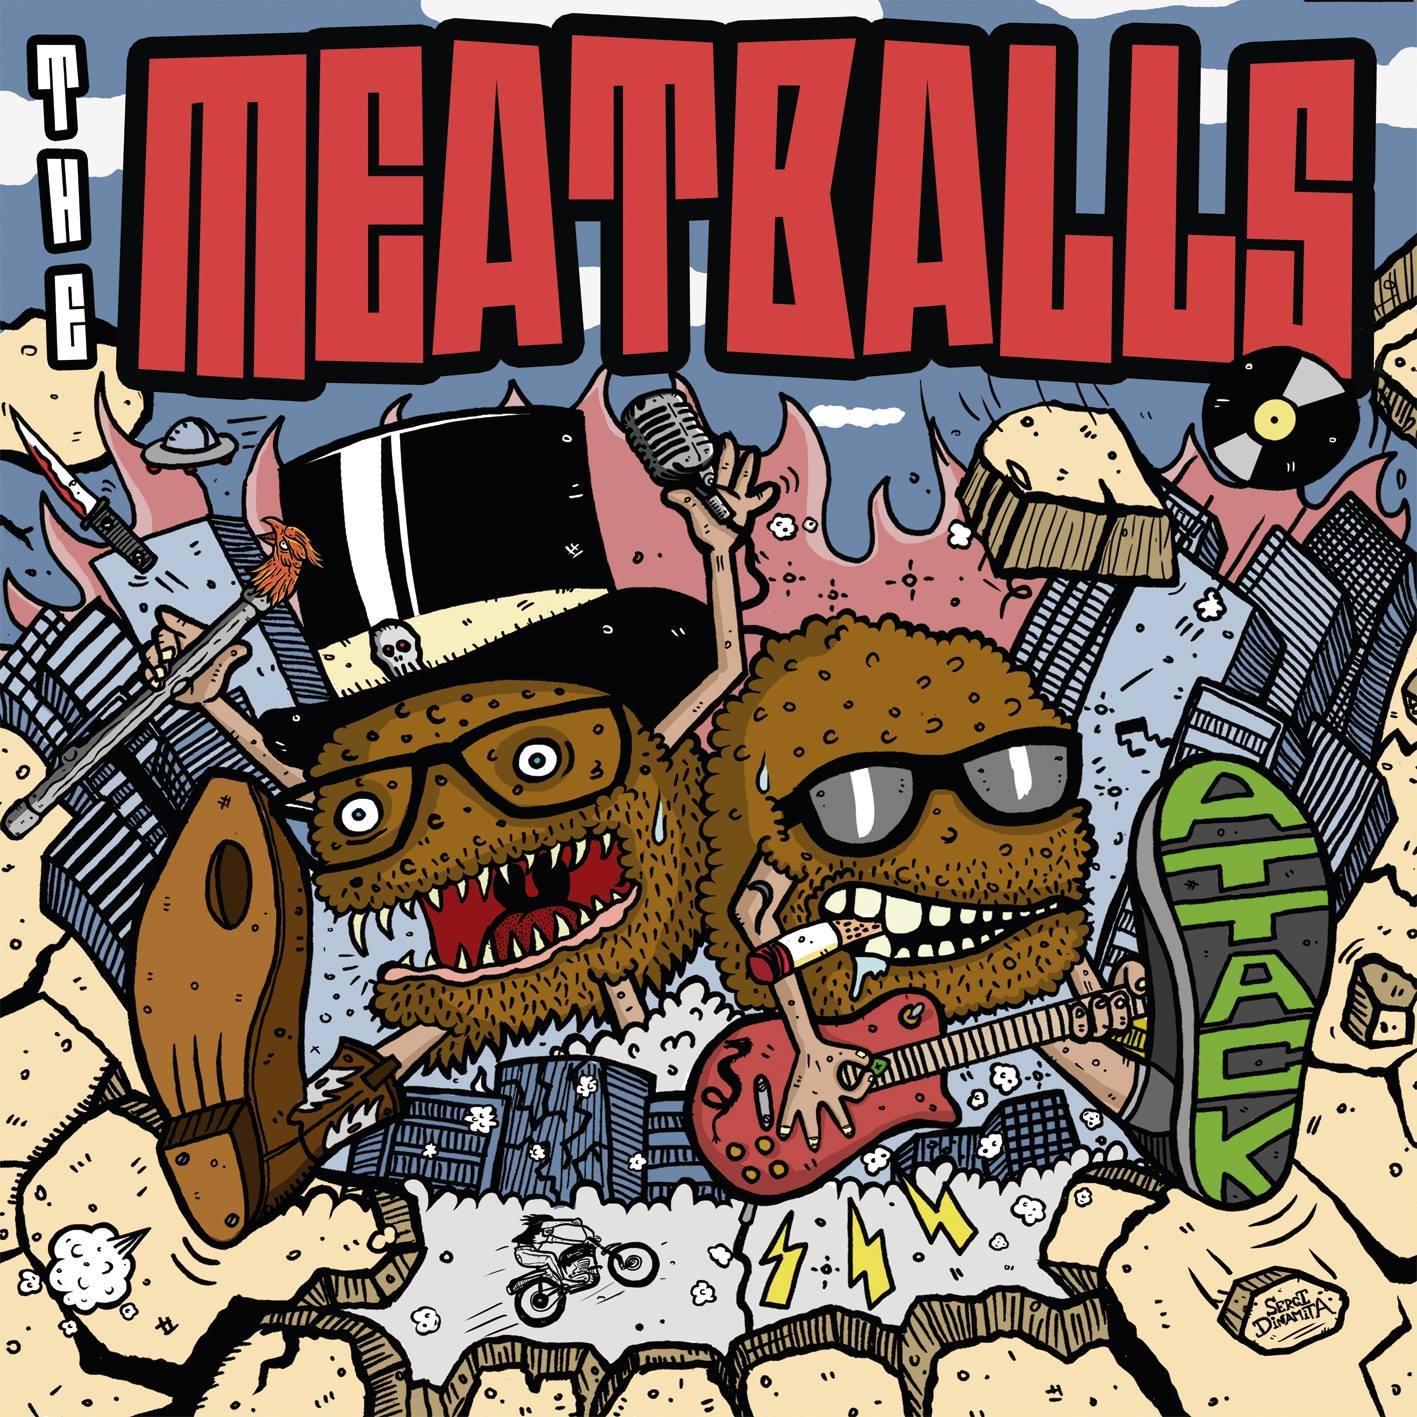 The Meatballs